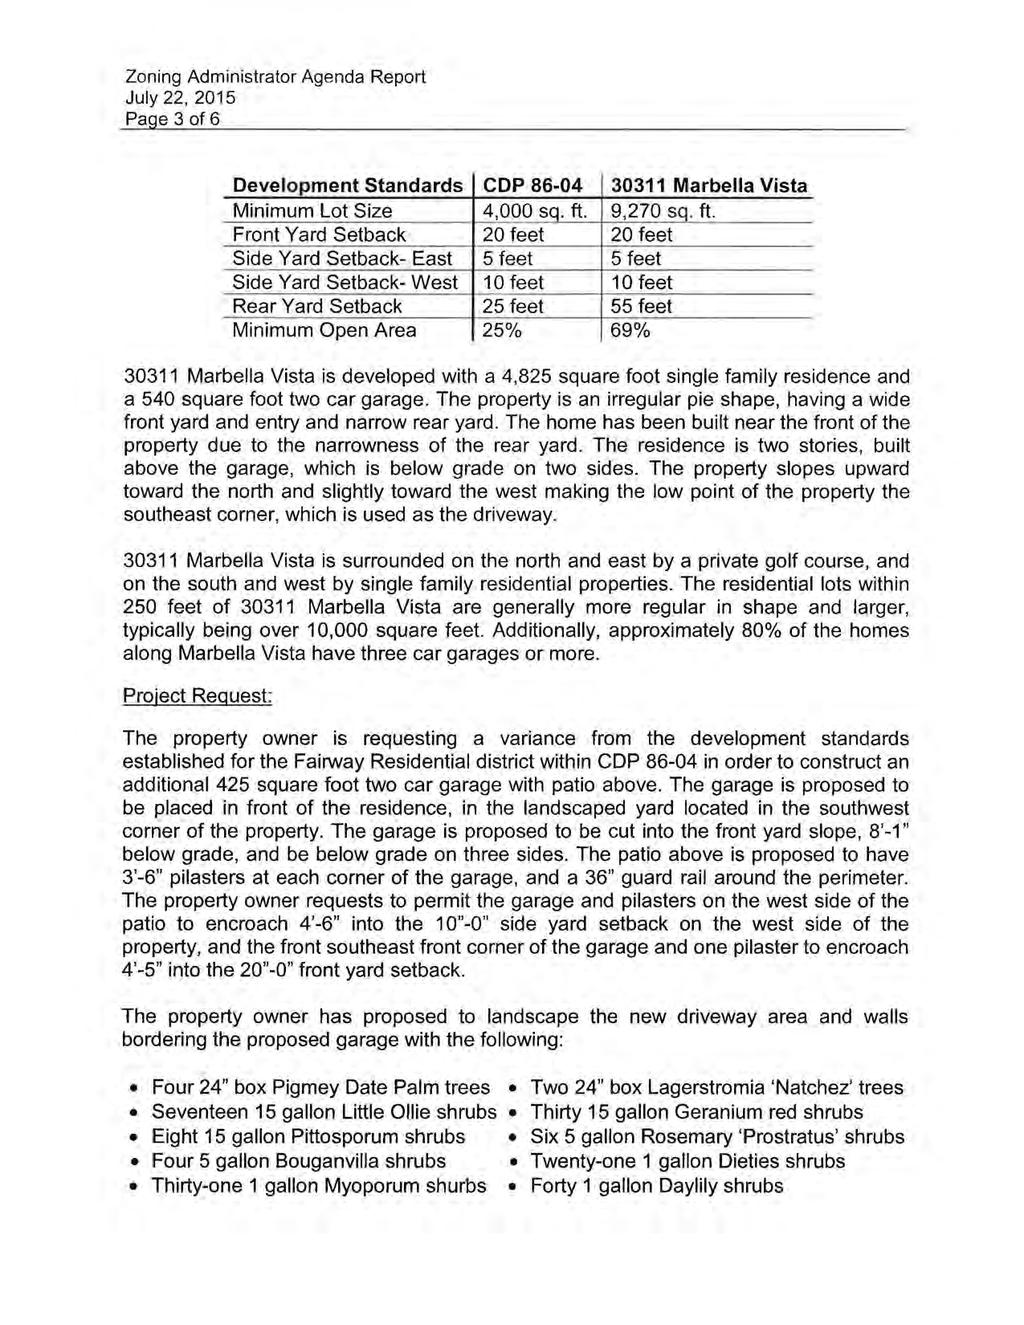 Zoning Administrator Agenda Report July 22, 2015 Pa e 3 of 6 Development Standards Minimum Lot Size Front Yard Setback Side Yard Setback- East Side Yard Setback- West Rear Yard Setback Minimum Open